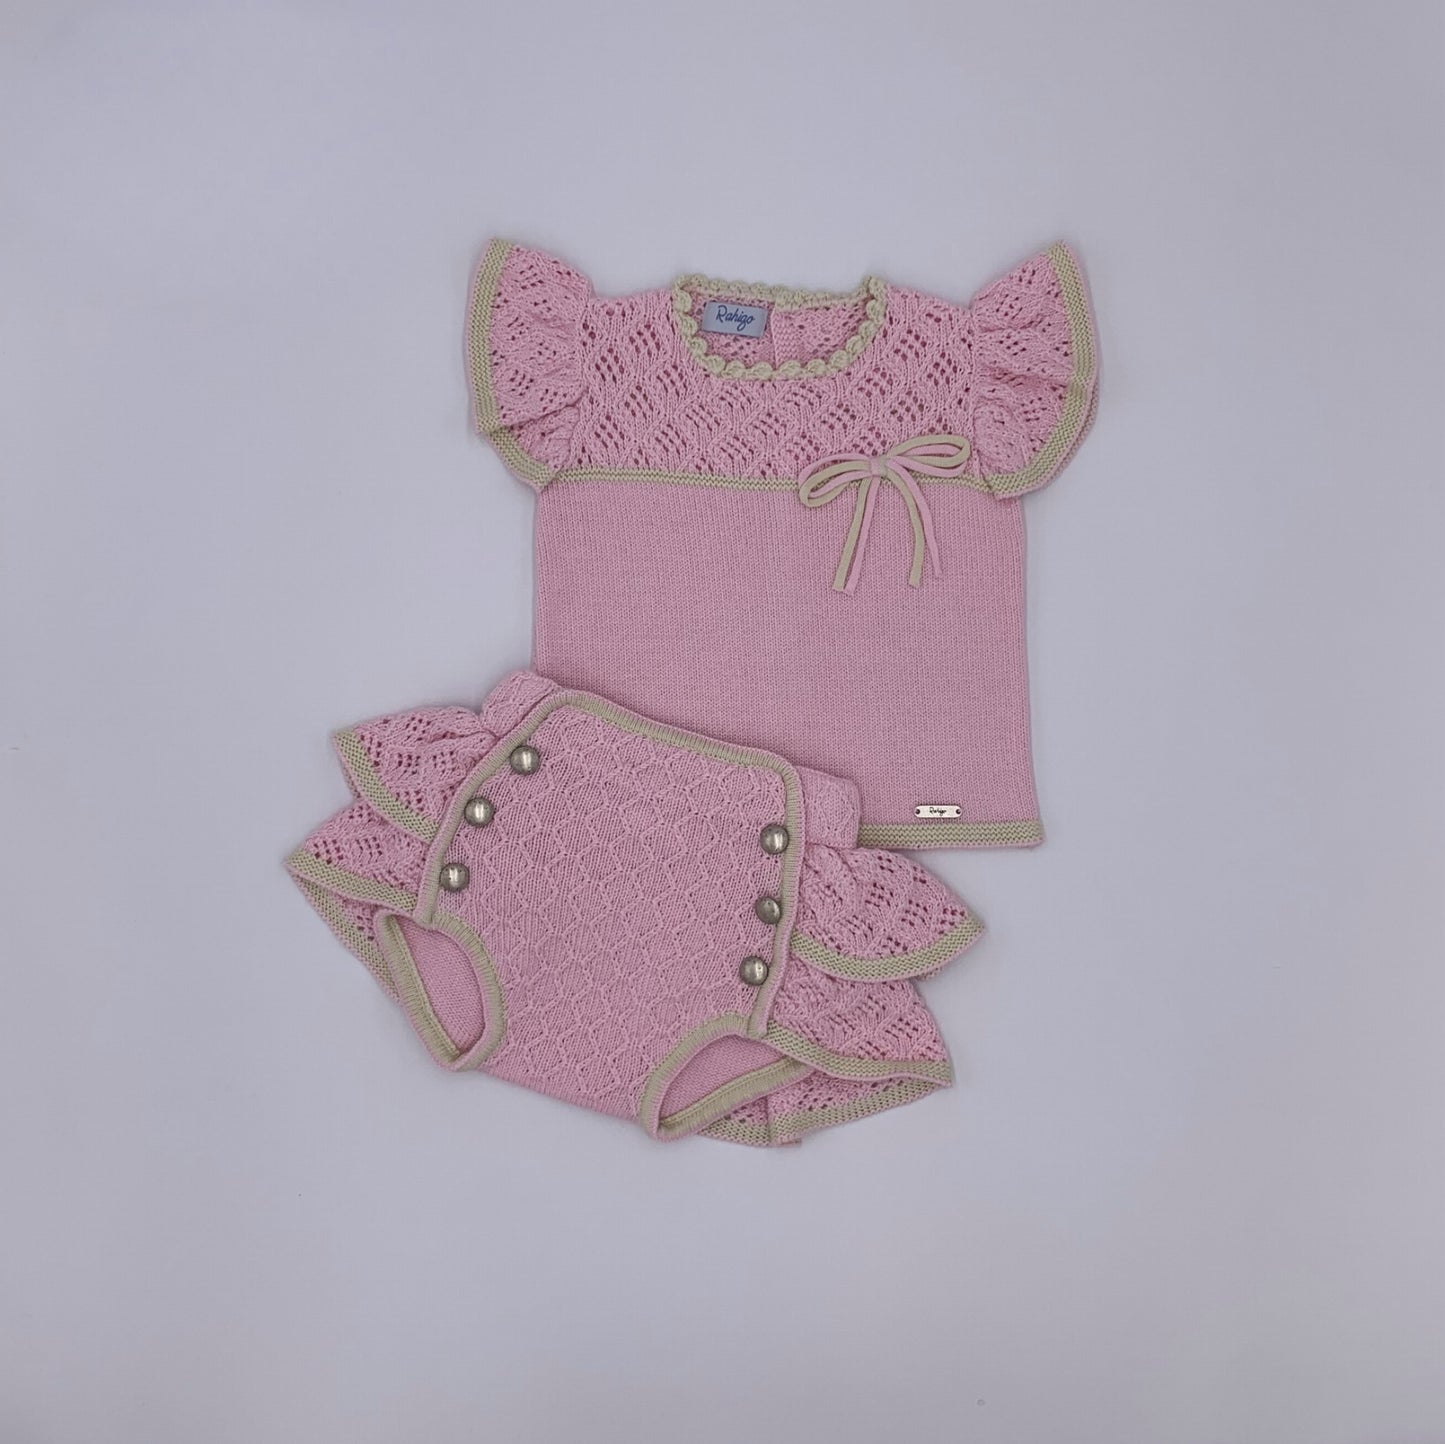 Pink jam pants and jumper for girls by Rahigo - Adora 